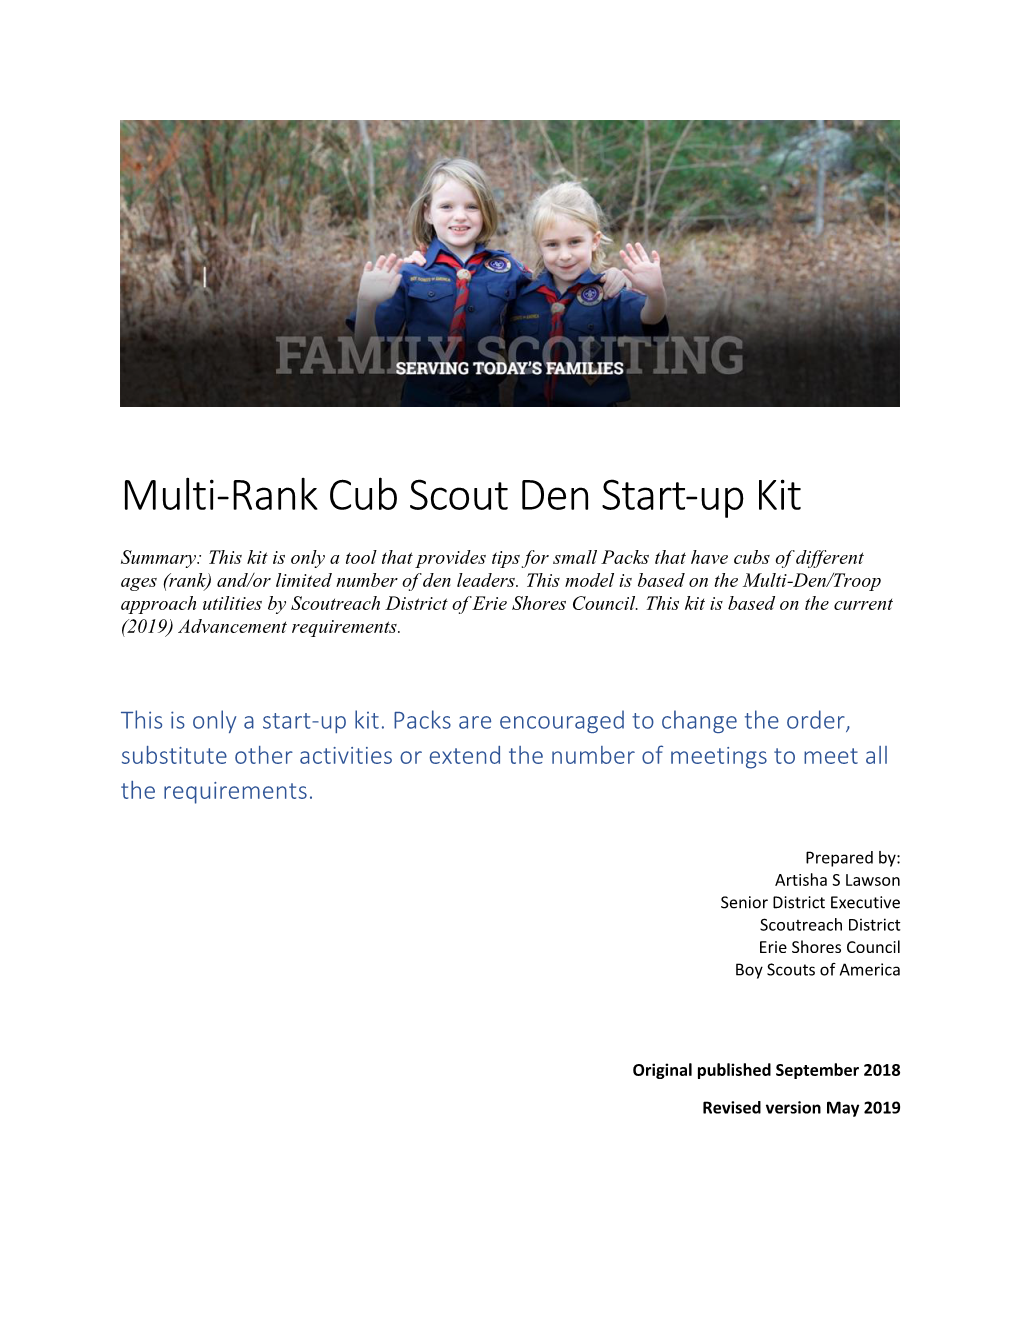 Multi-Rank Cub Scout Den Start-Up Kit